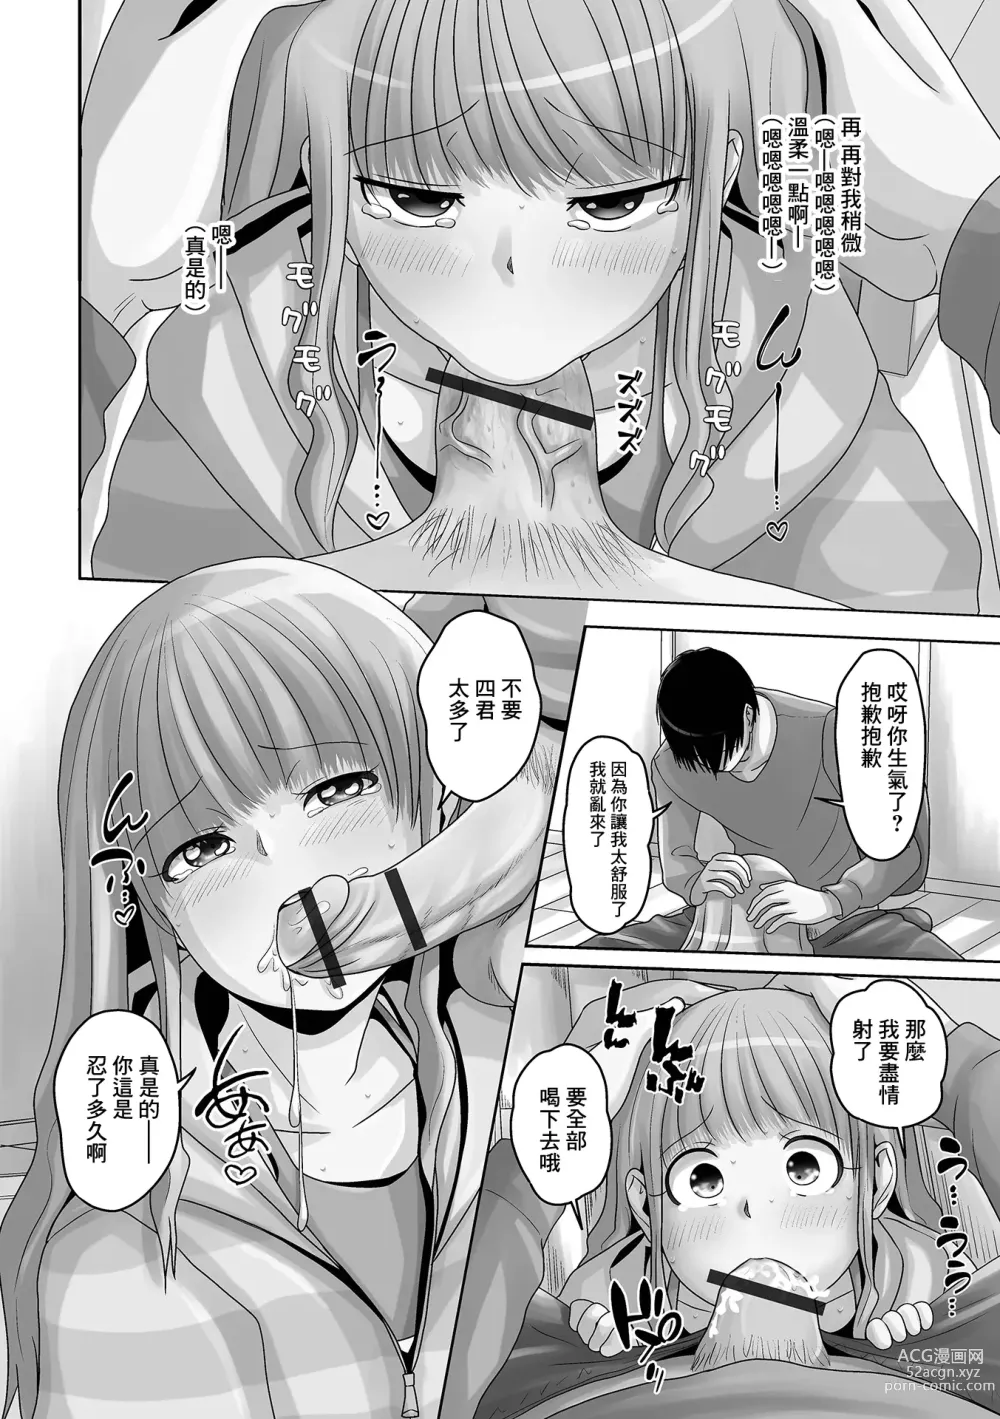 Page 6 of manga Roommate wa Otokonoko